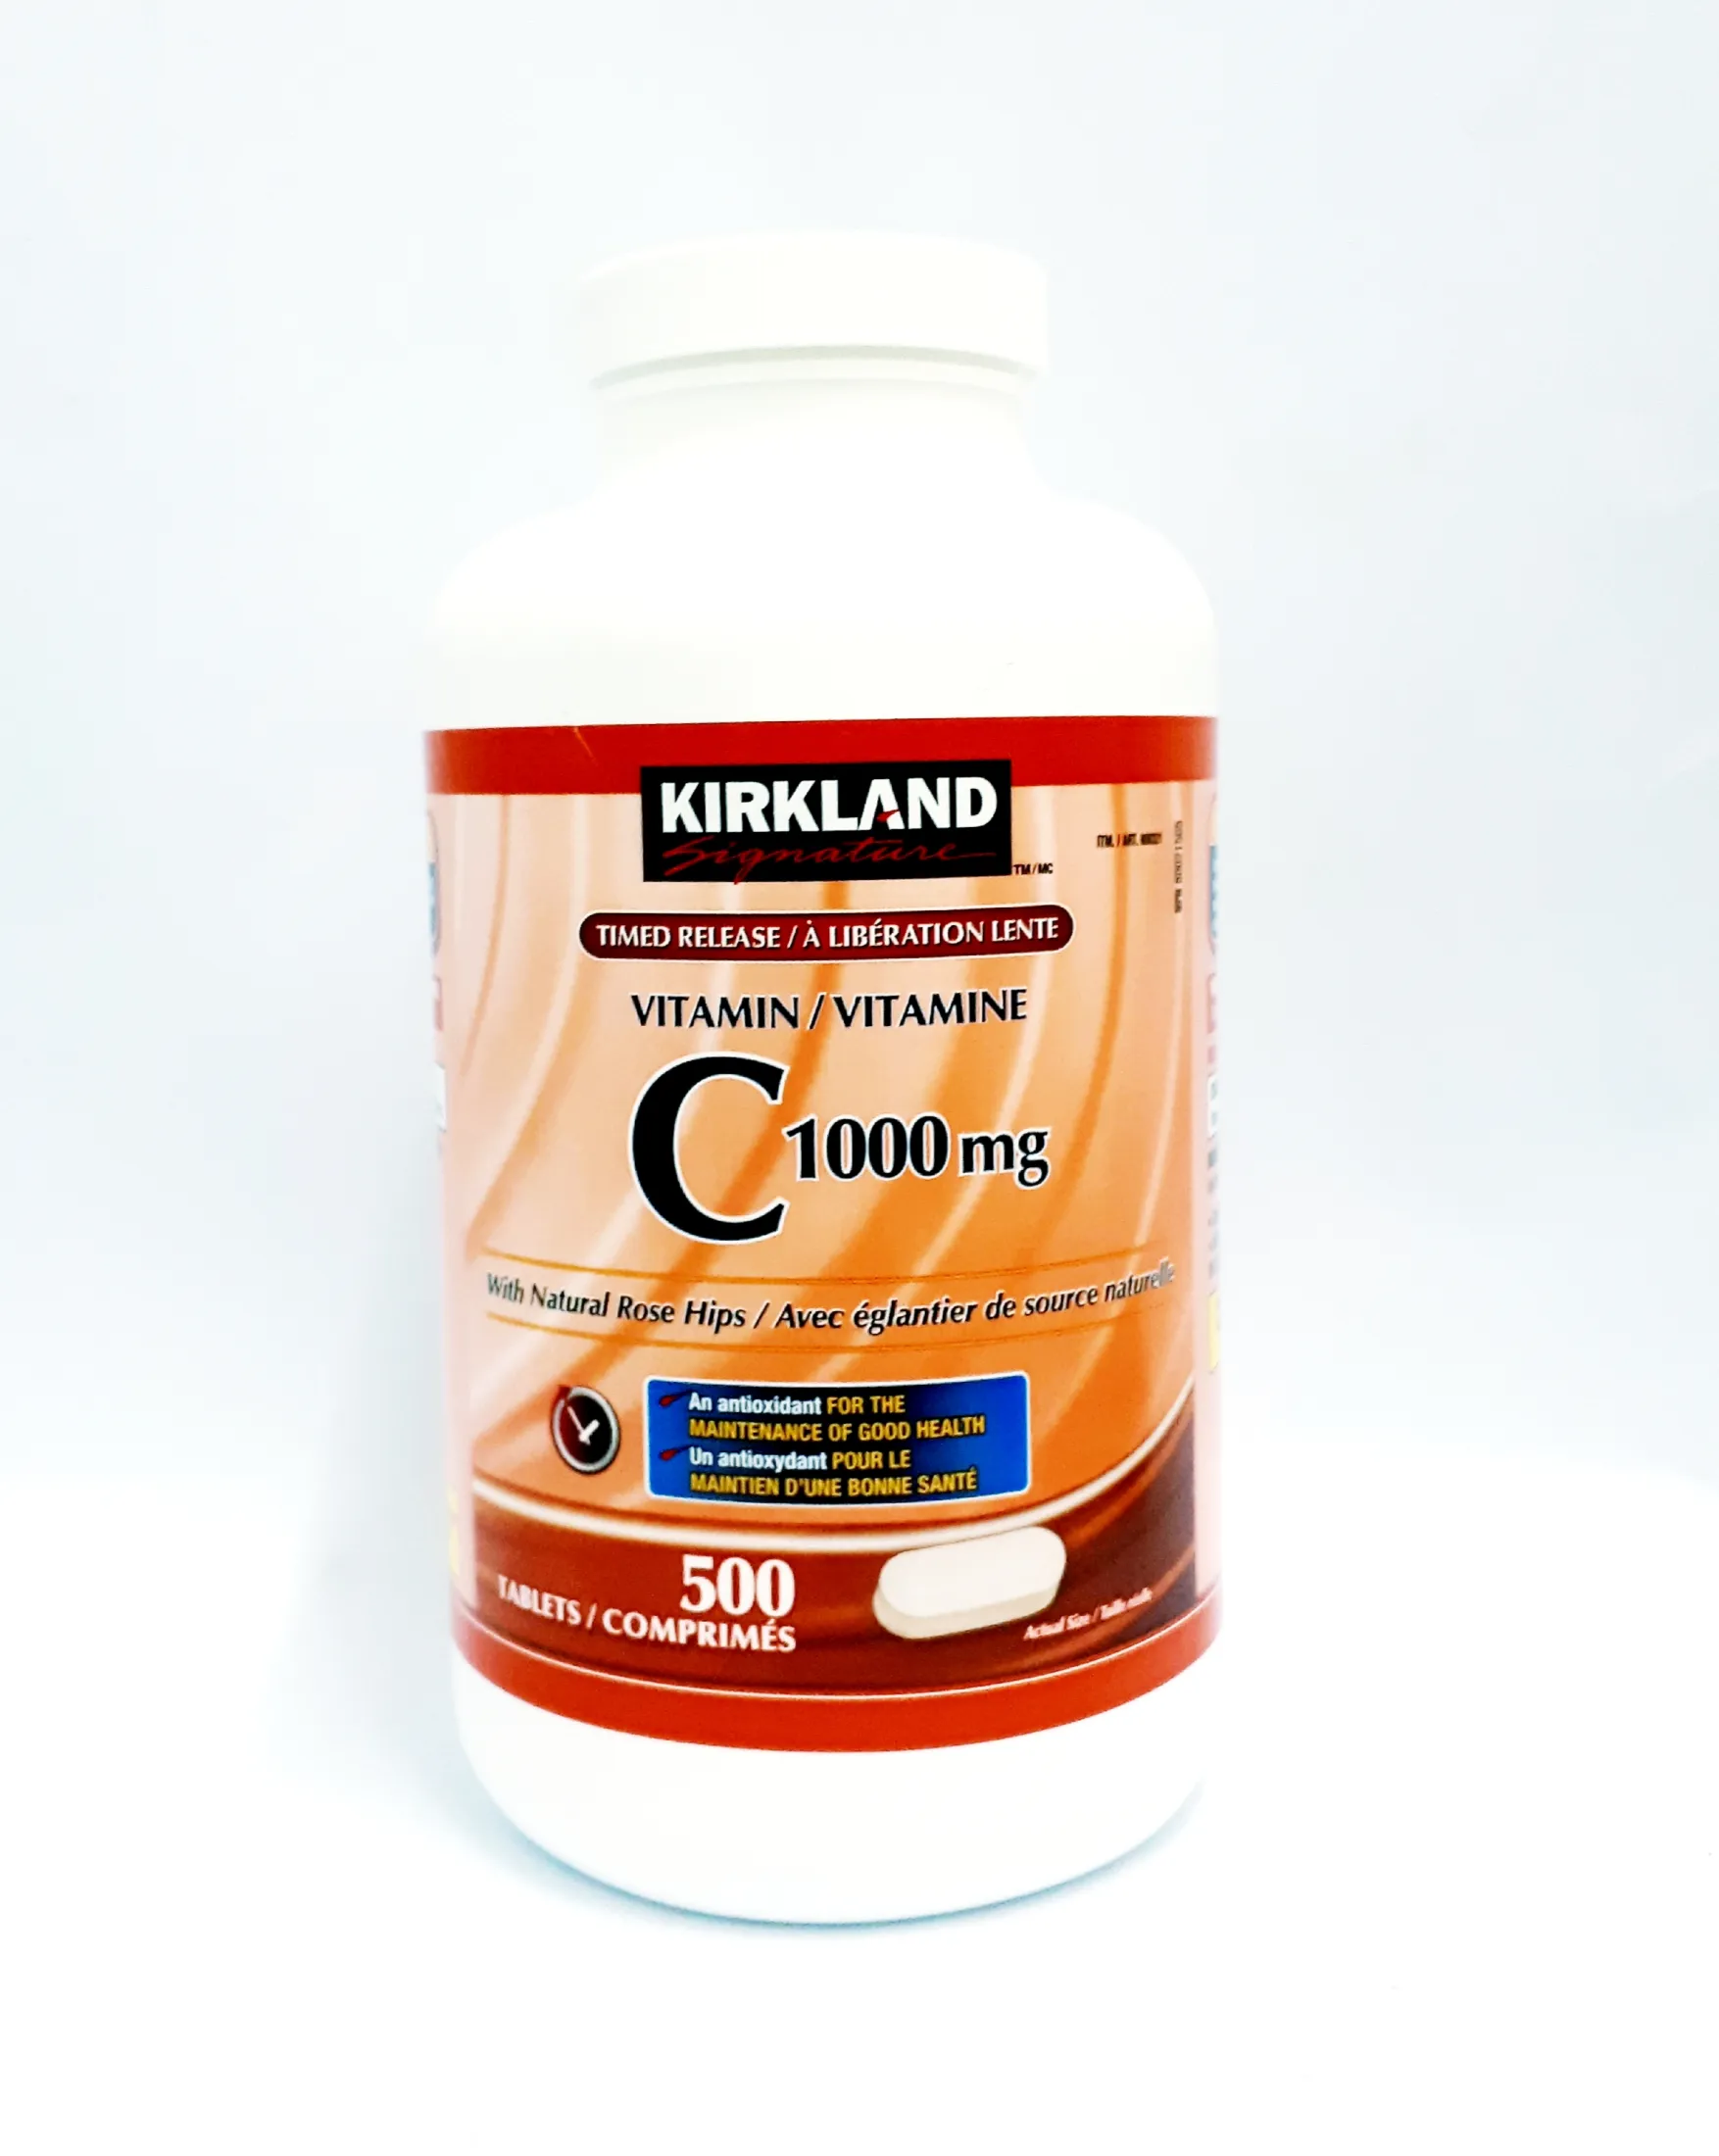 Kirkland Signature Vitamin C 1000 Mg 500 Tablets From Canada Exp 8 23 Lazada Ph